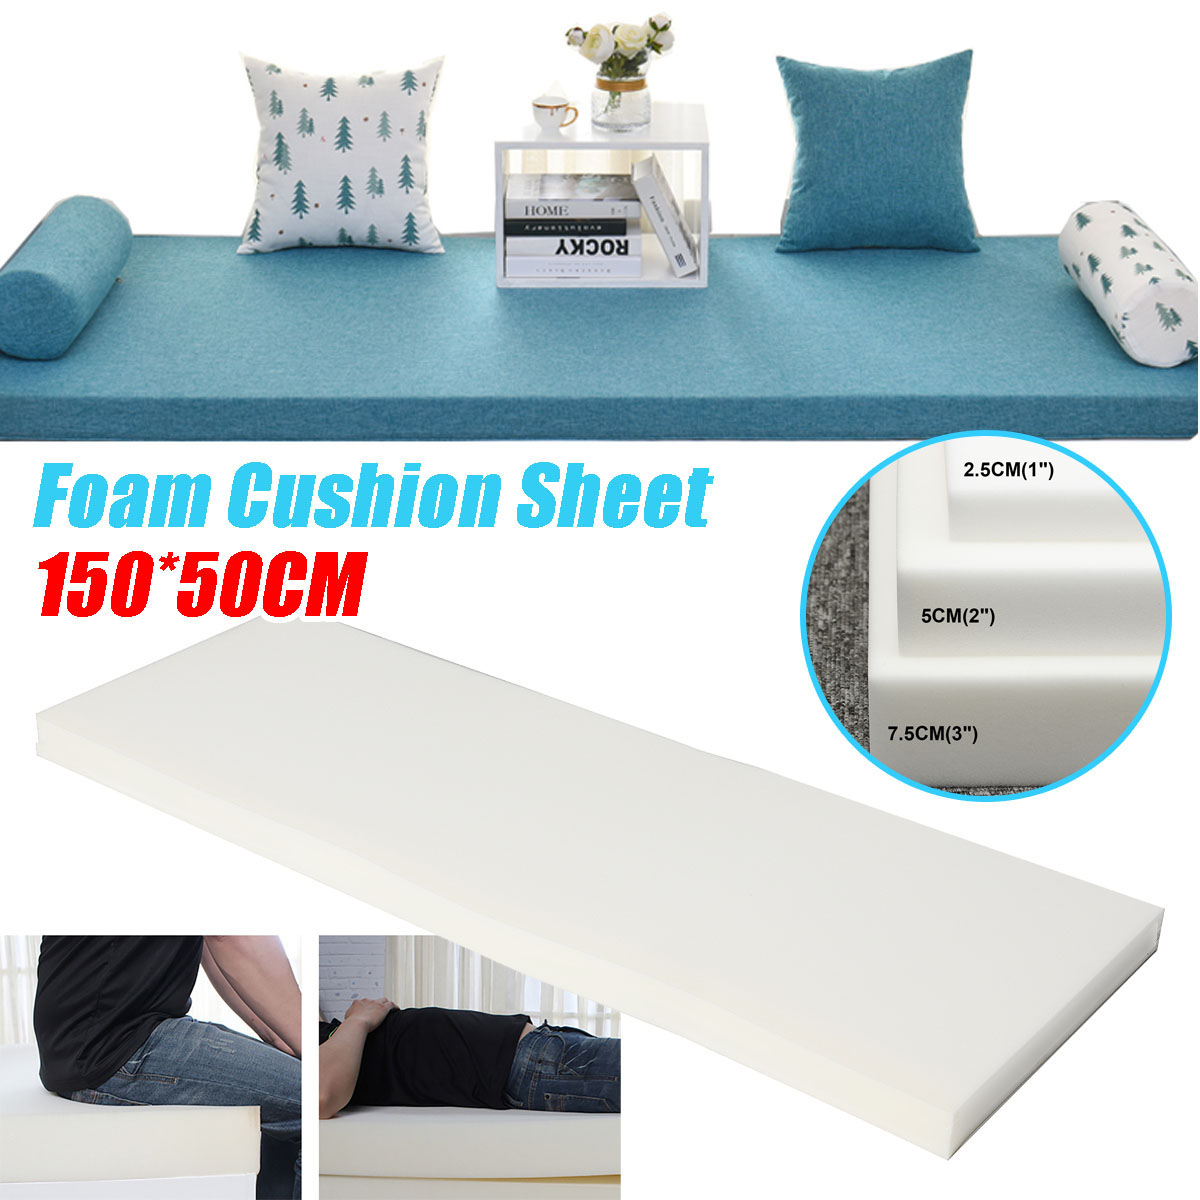 Upholstery Foam Cushion High Density  Density Foam Seat Cushion - 50d High  Support - Aliexpress